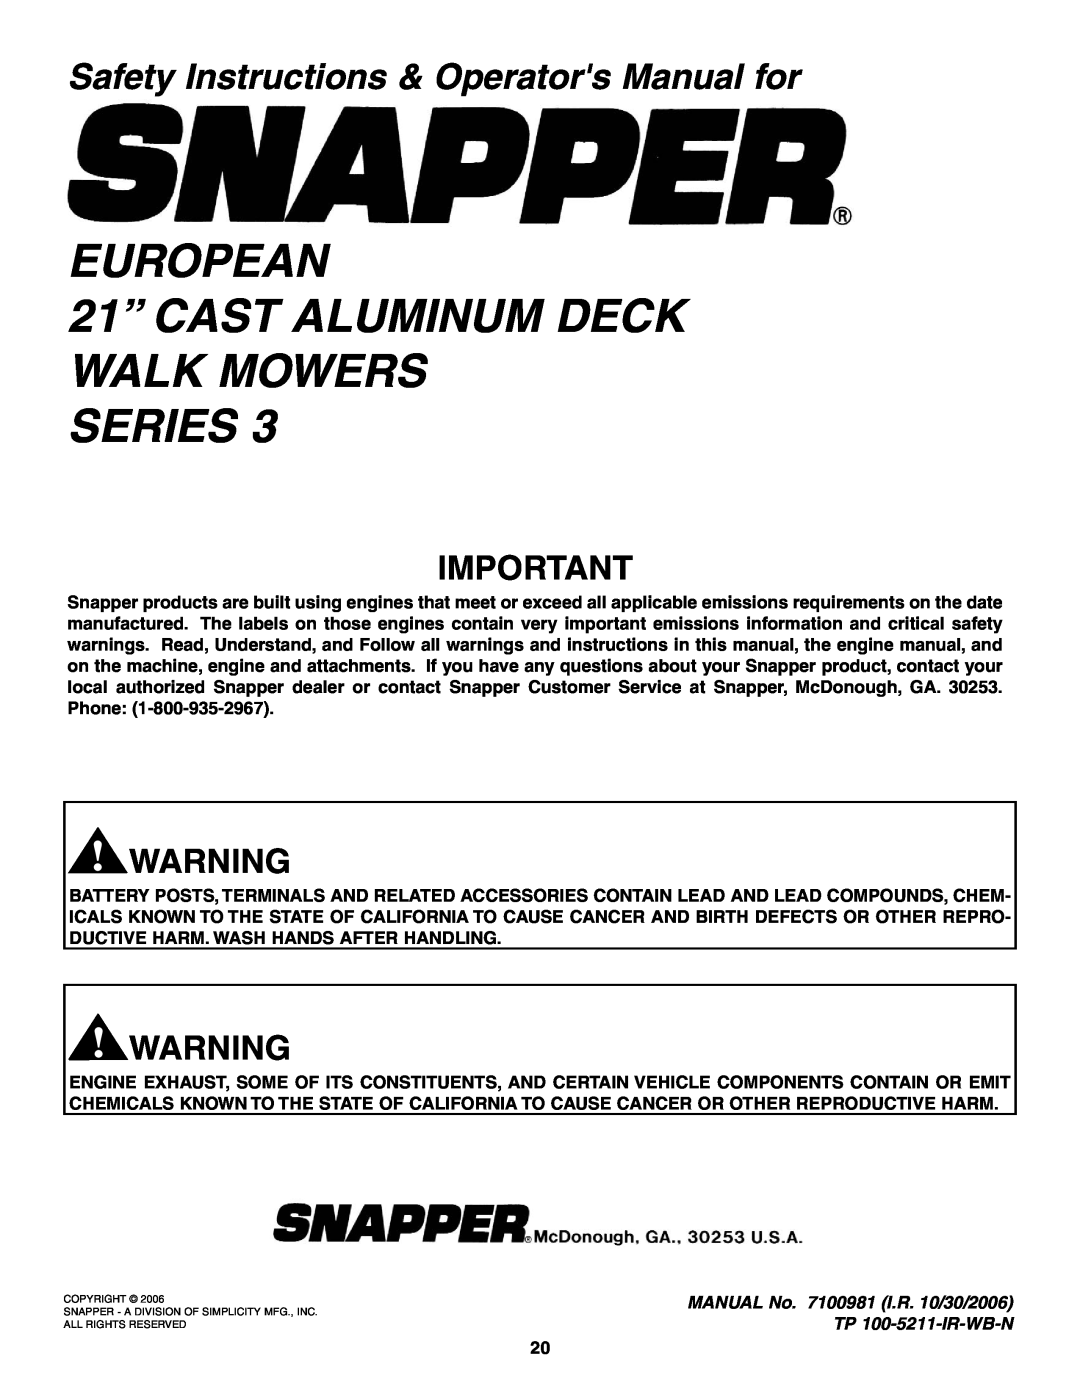 Snapper ELP216753BDV EUROPEAN 21” CAST ALUMINUM DECK WALK MOWERS SERIES, Safety Instructions & Operators Manual for 